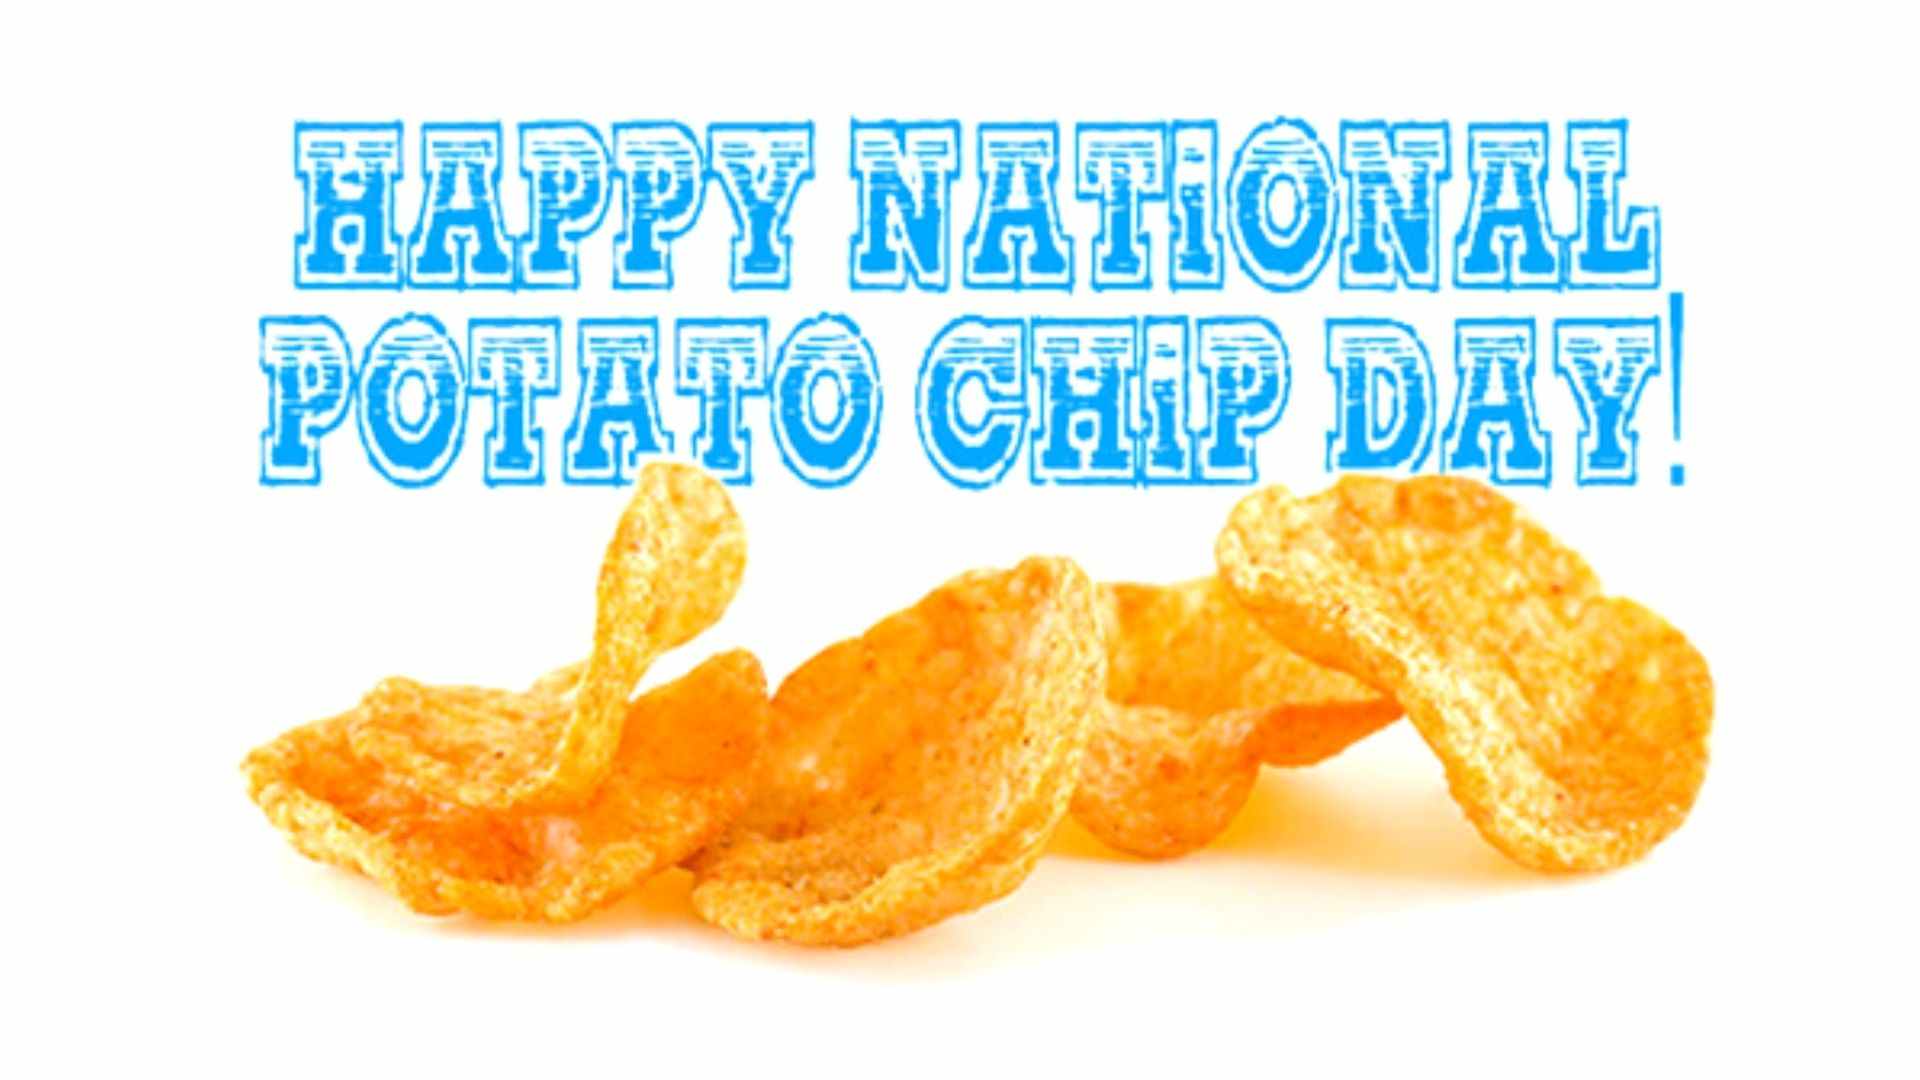 Happy potato chip day 2022 Image